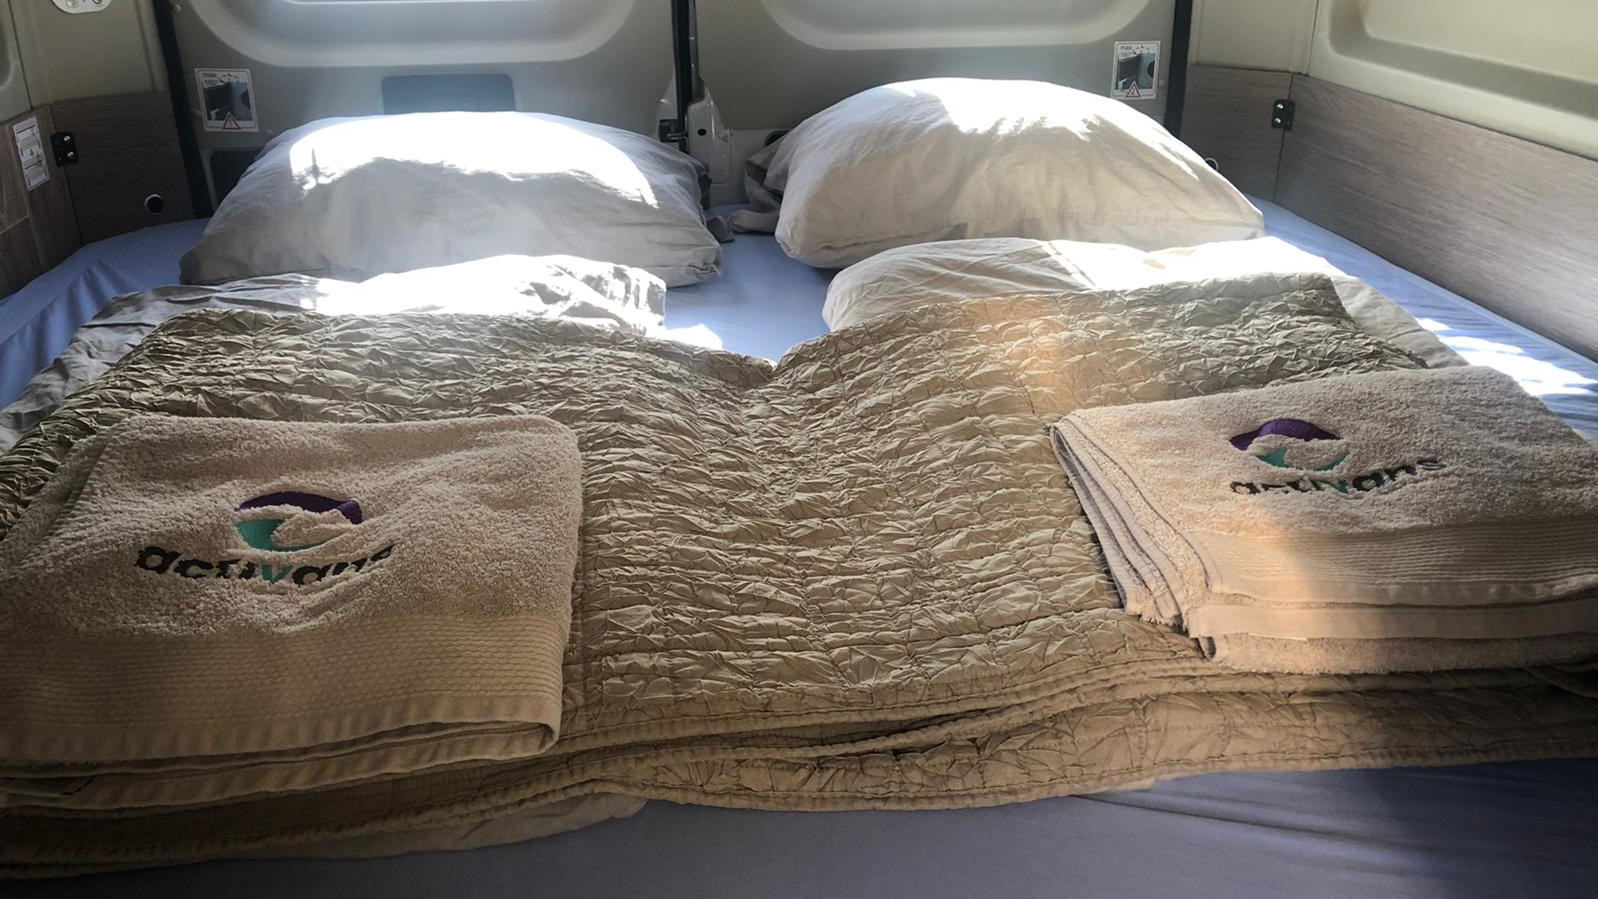 prepared bed in the campervan